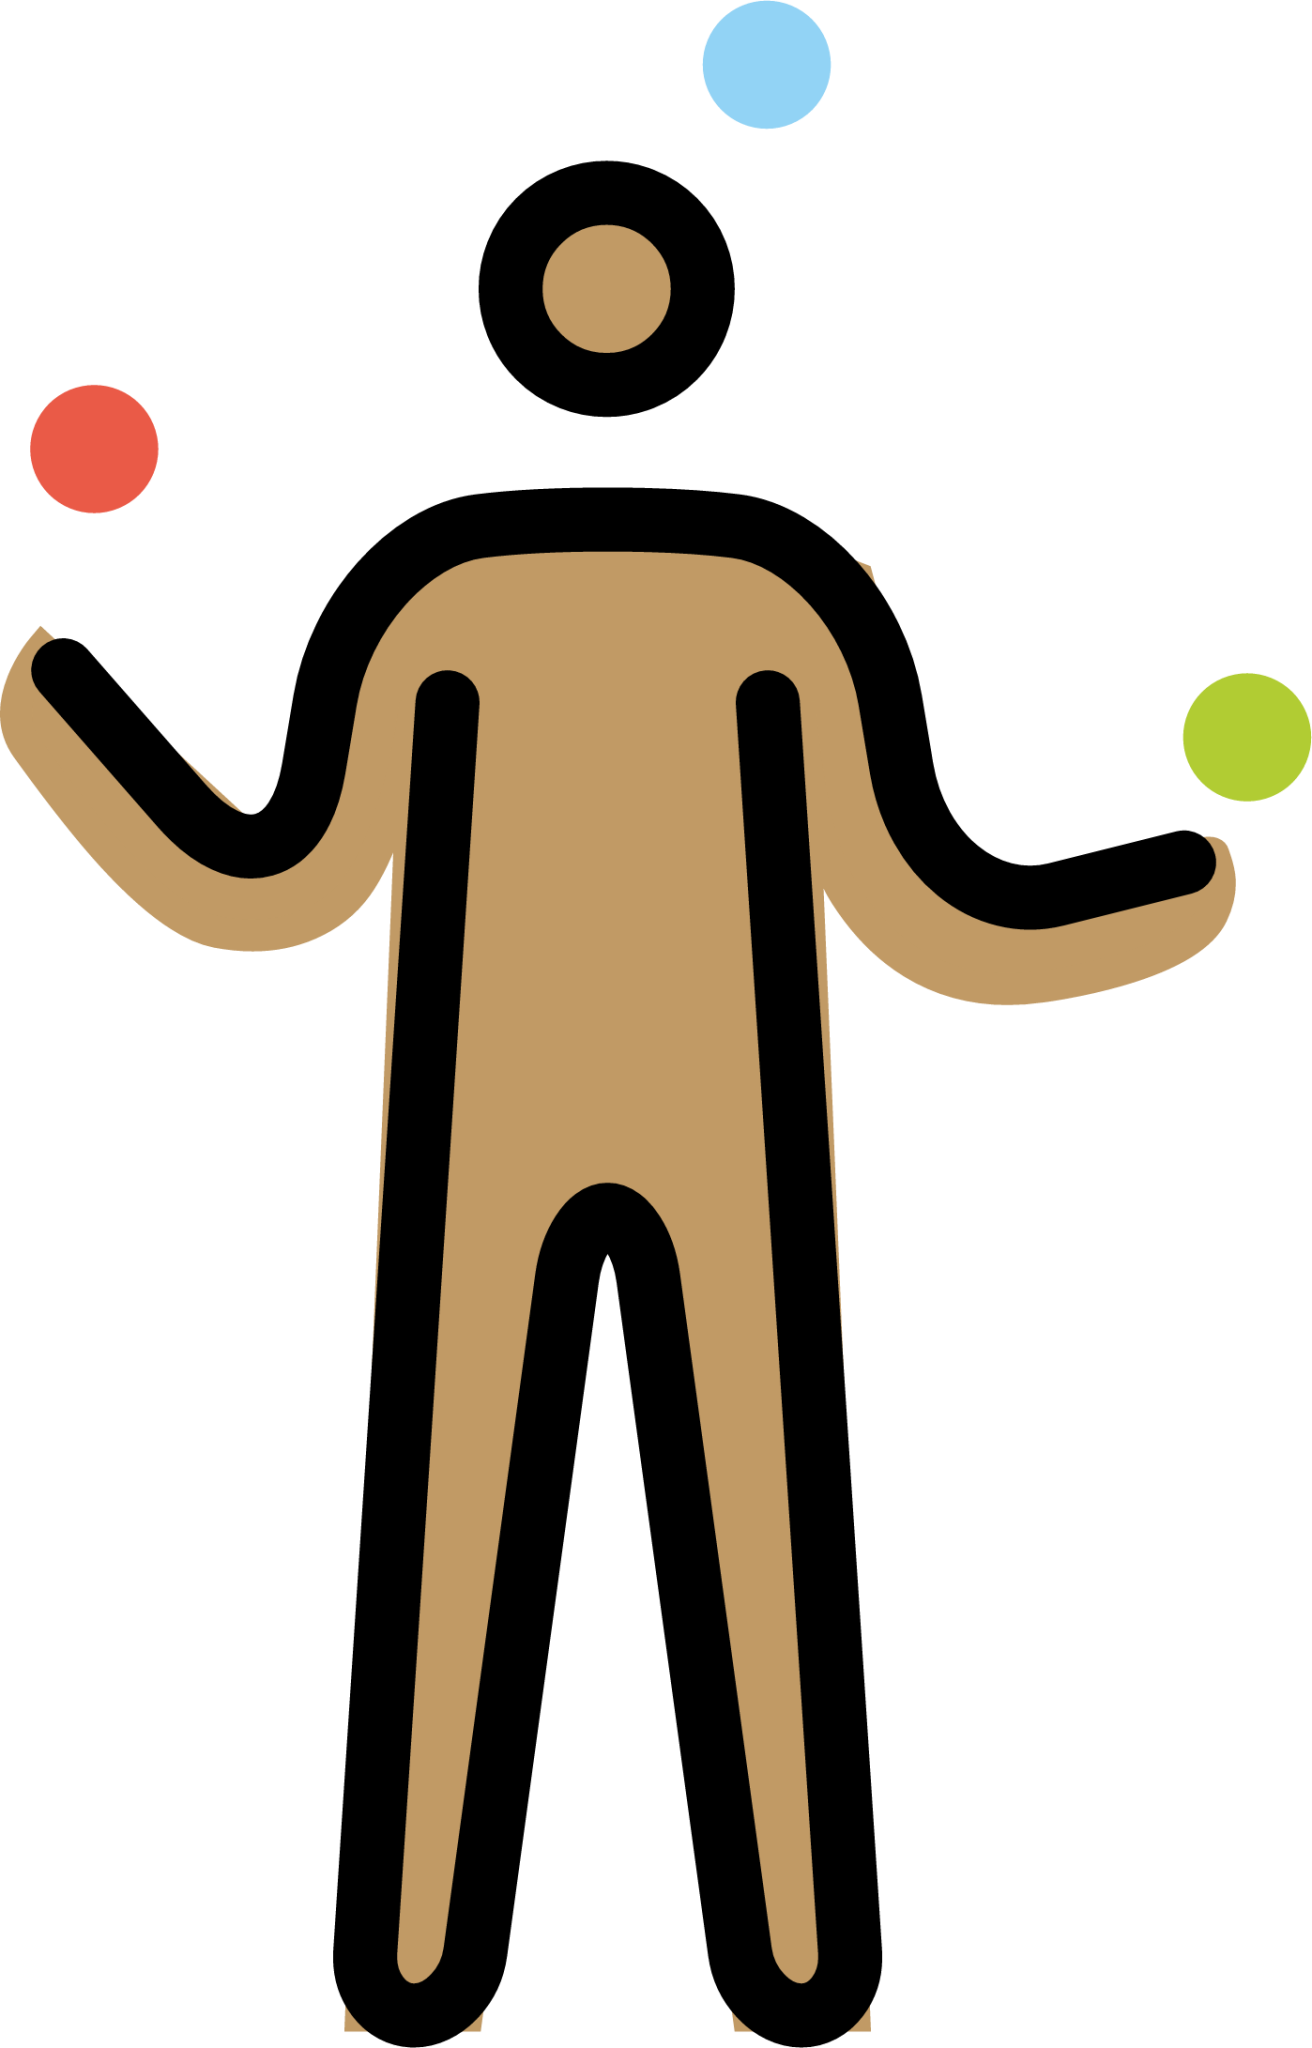 person juggling: medium skin tone emoji